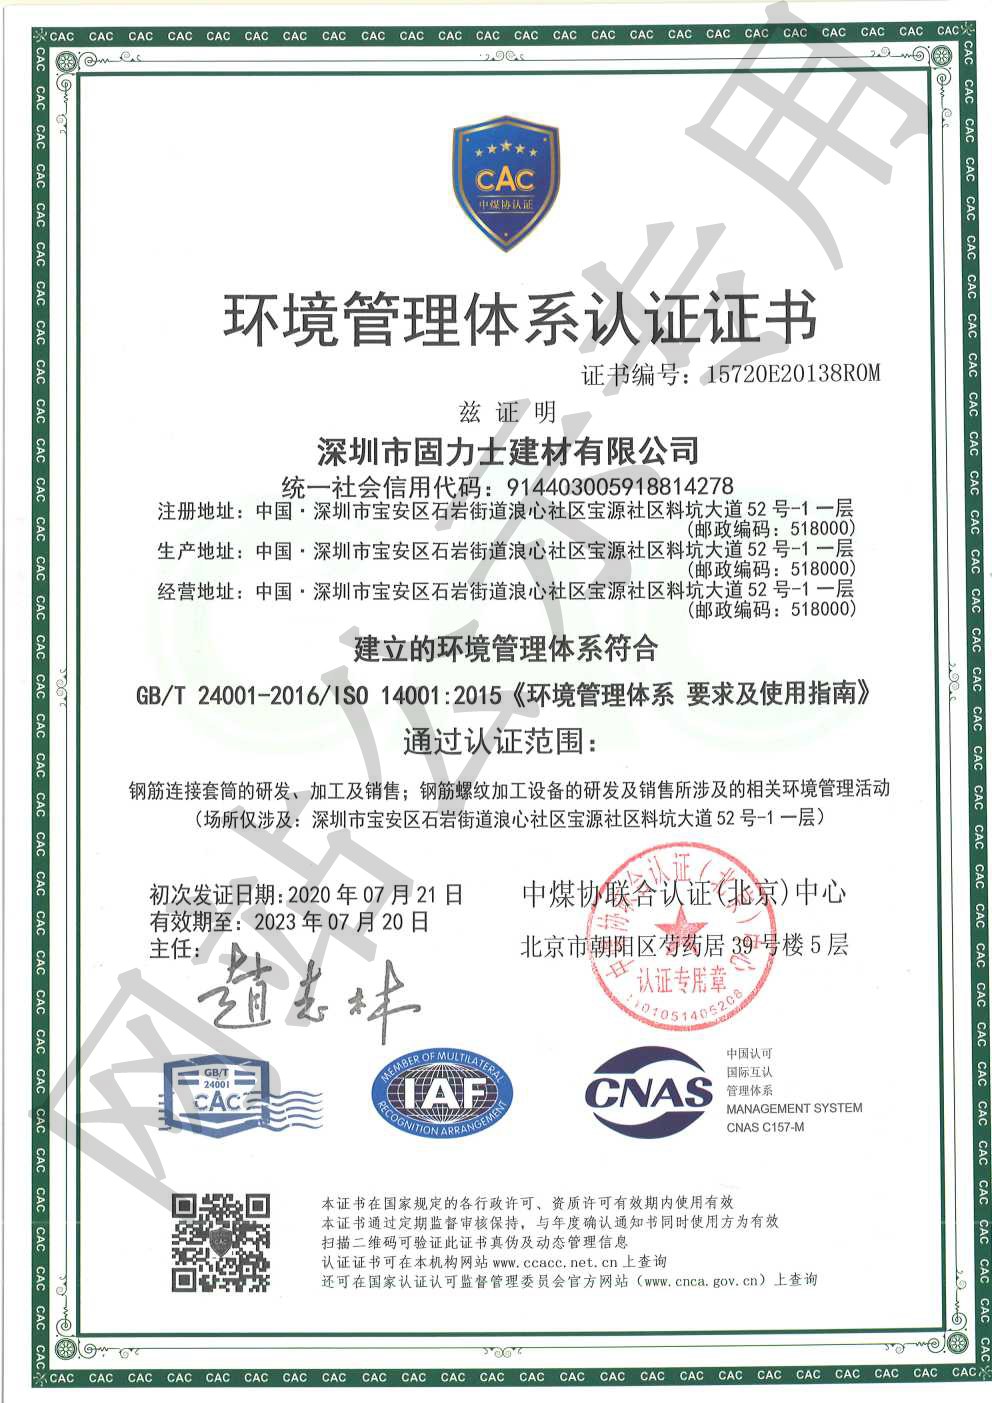 兴安ISO14001证书